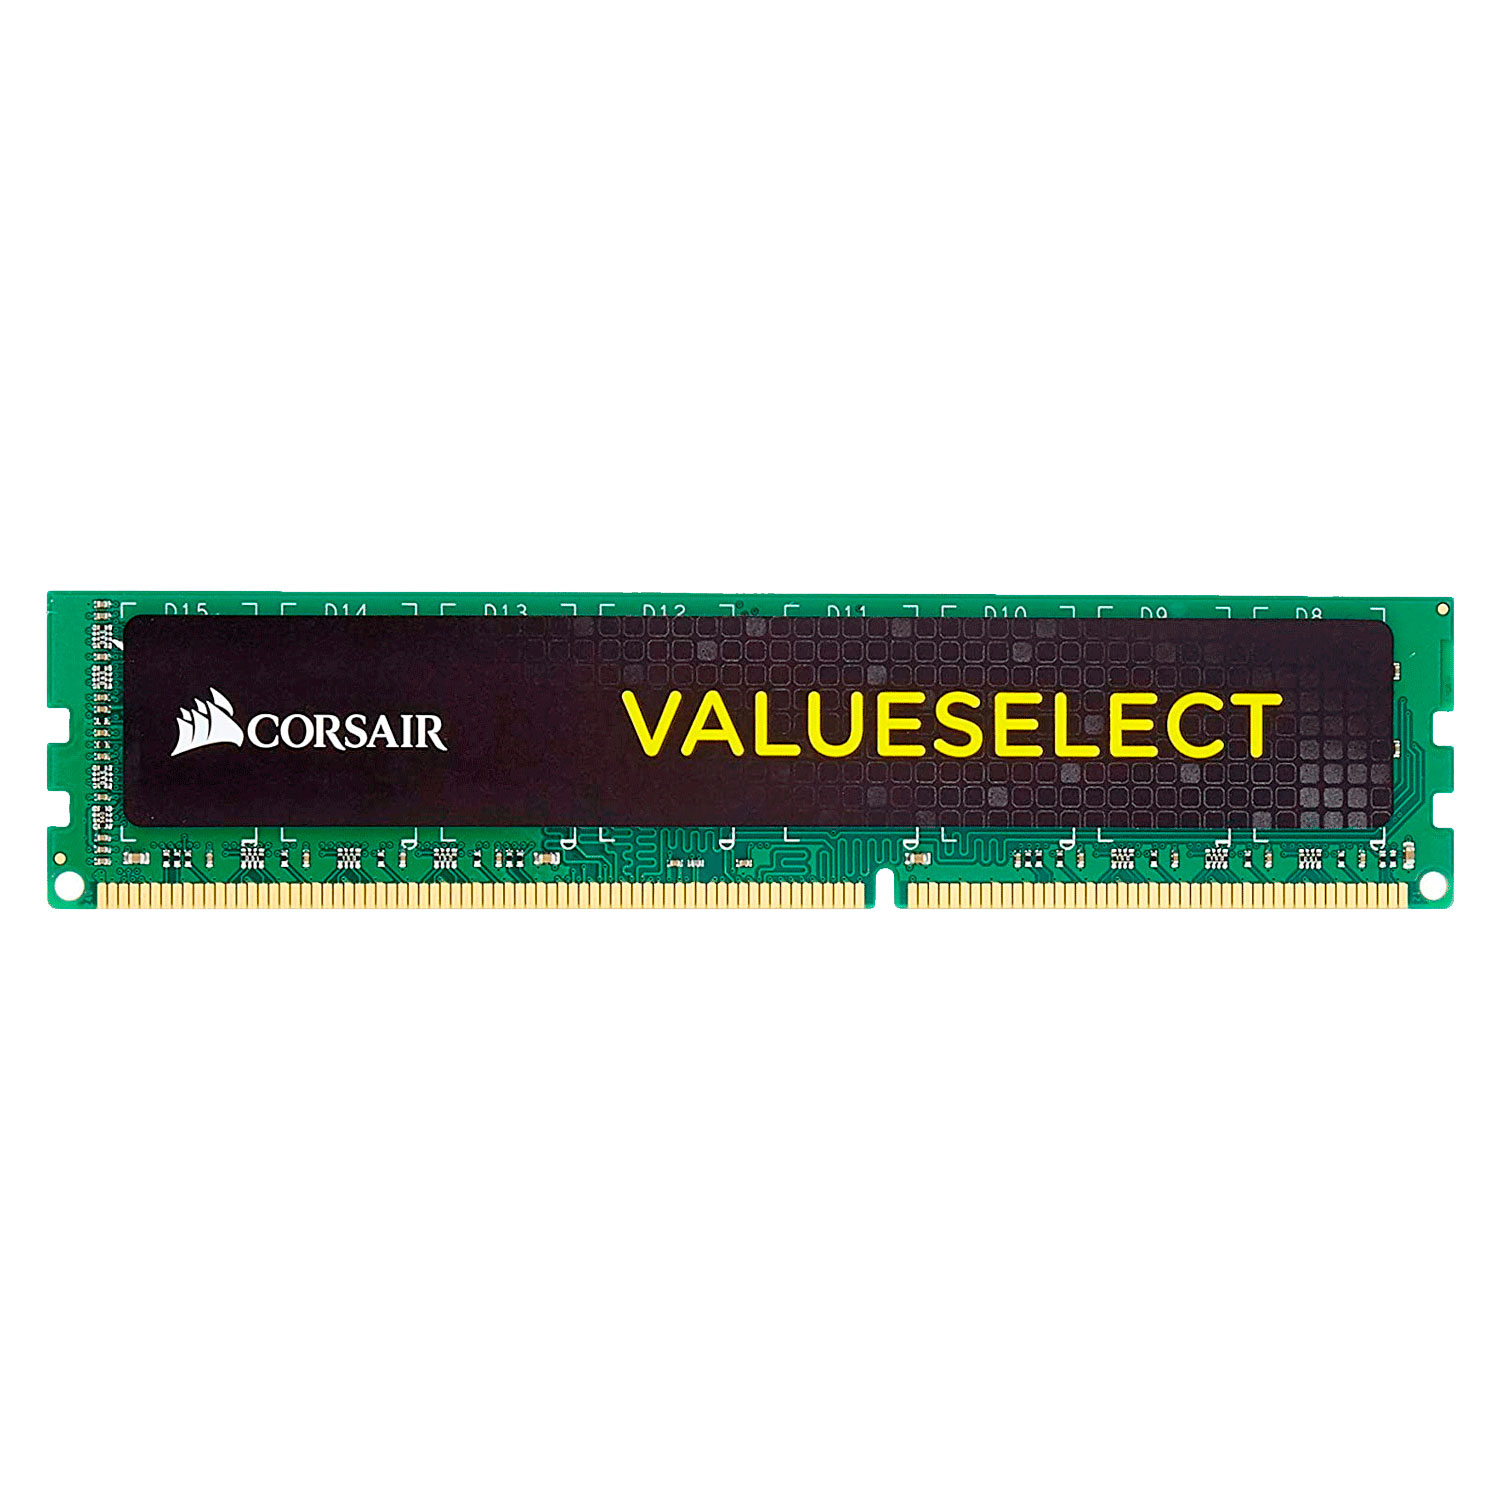 Memória RAM Corsair Valueselect 8GB DDR3 1333 MHz - CMV8GX3M1A1333C9